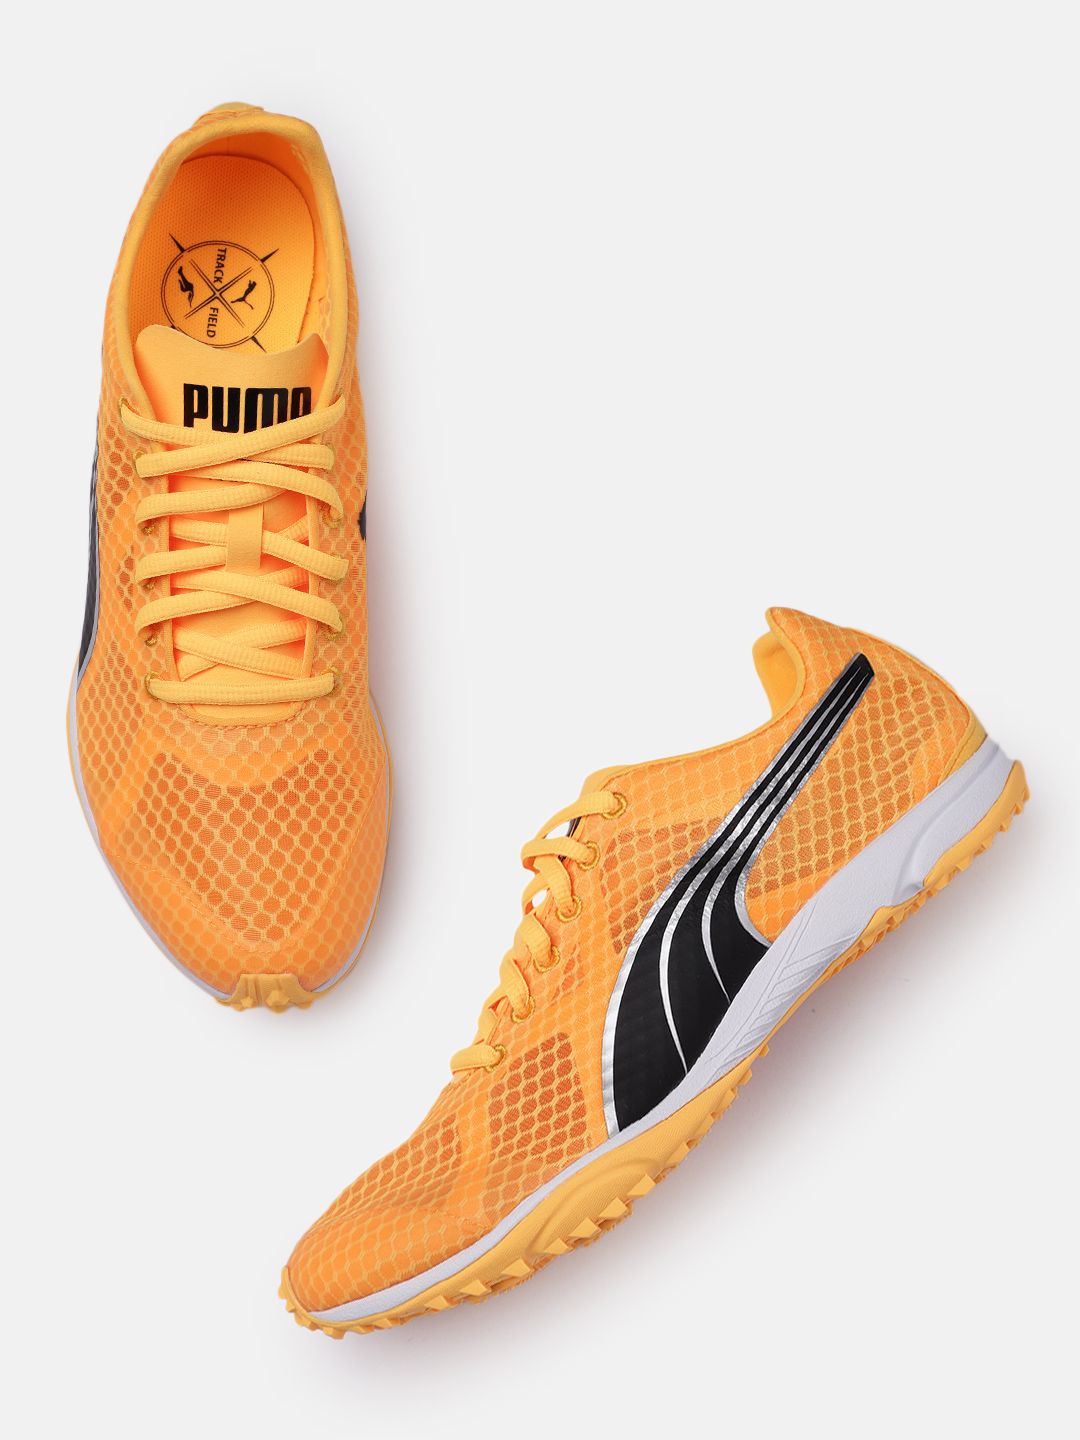 Puma Unisex Orange Textured evoSPEED Haraka 7 Removable Cleats Running Shoes Price in India